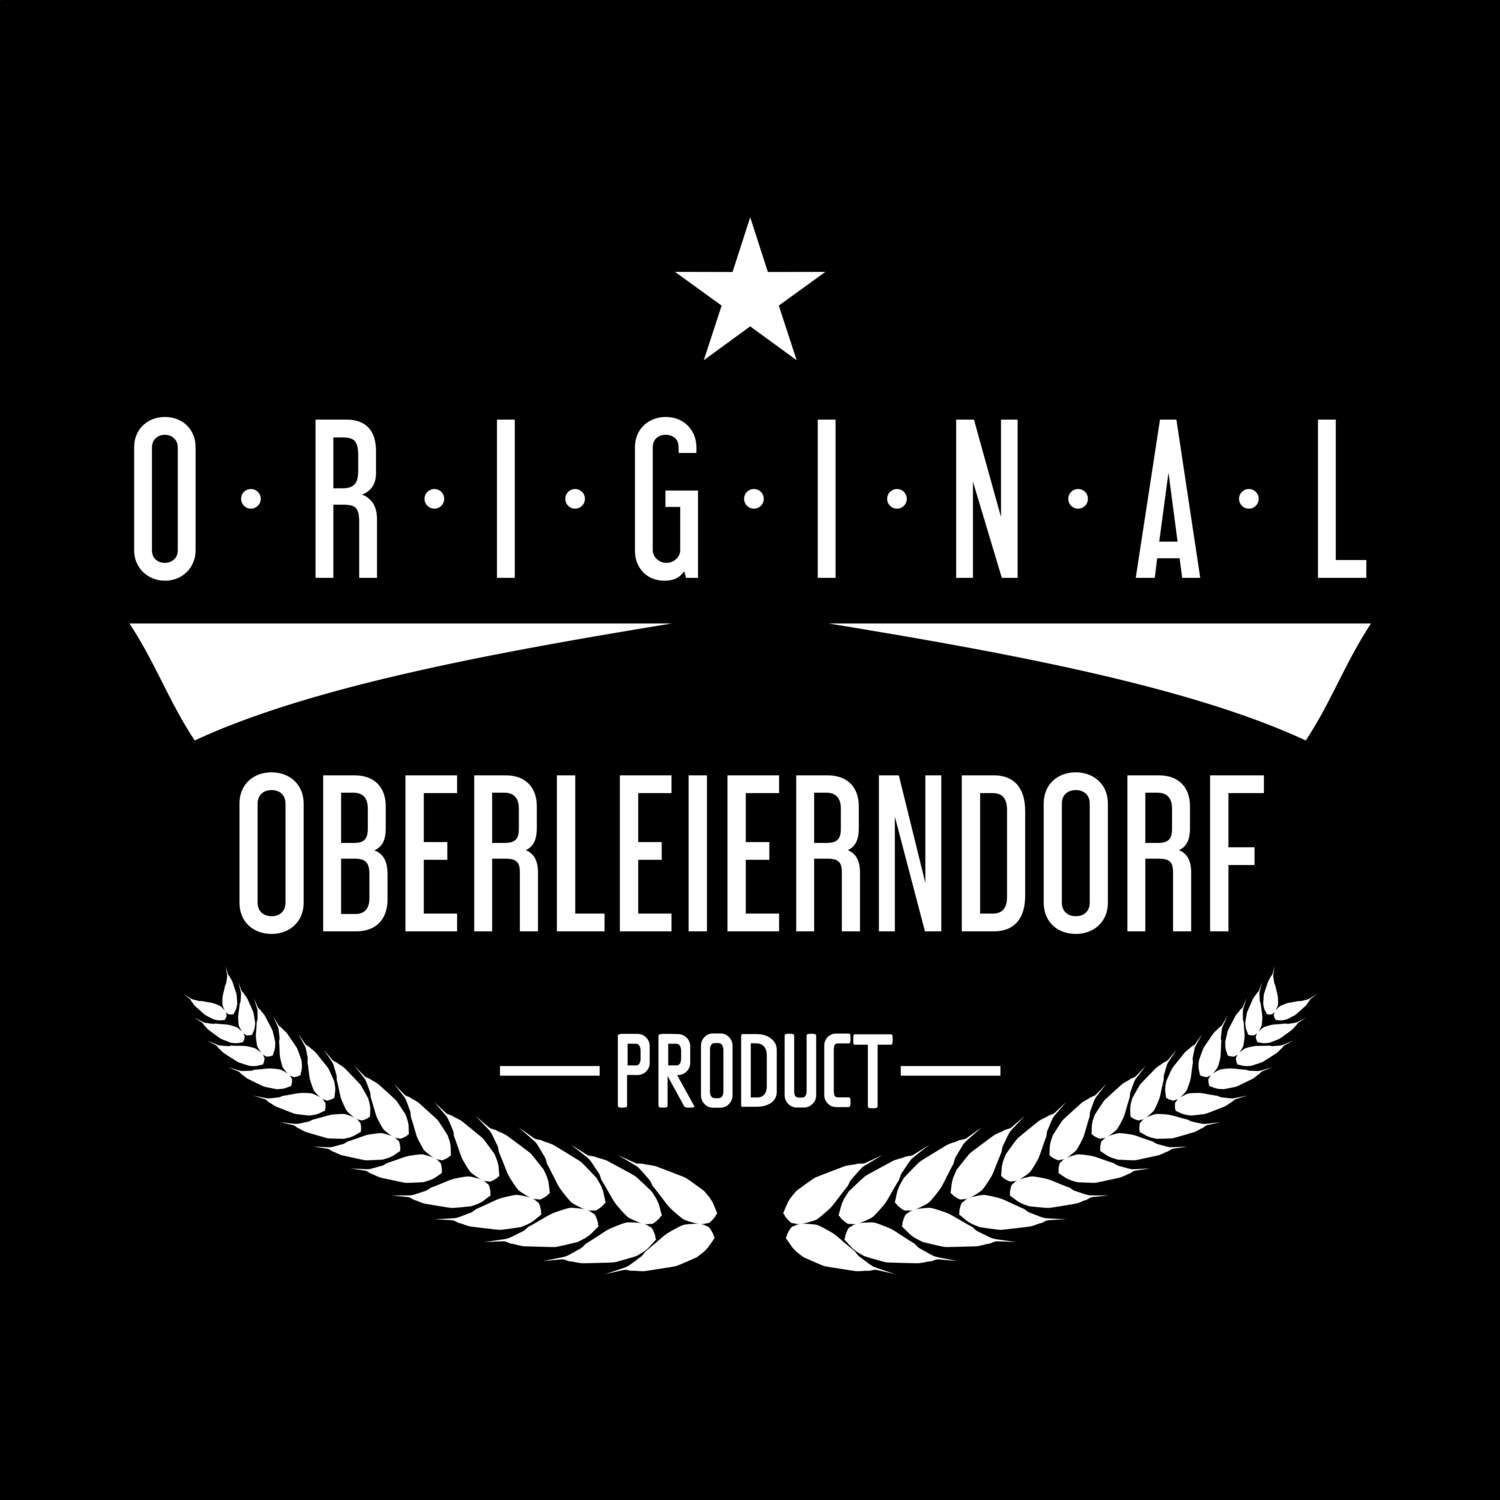 Oberleierndorf T-Shirt »Original Product«